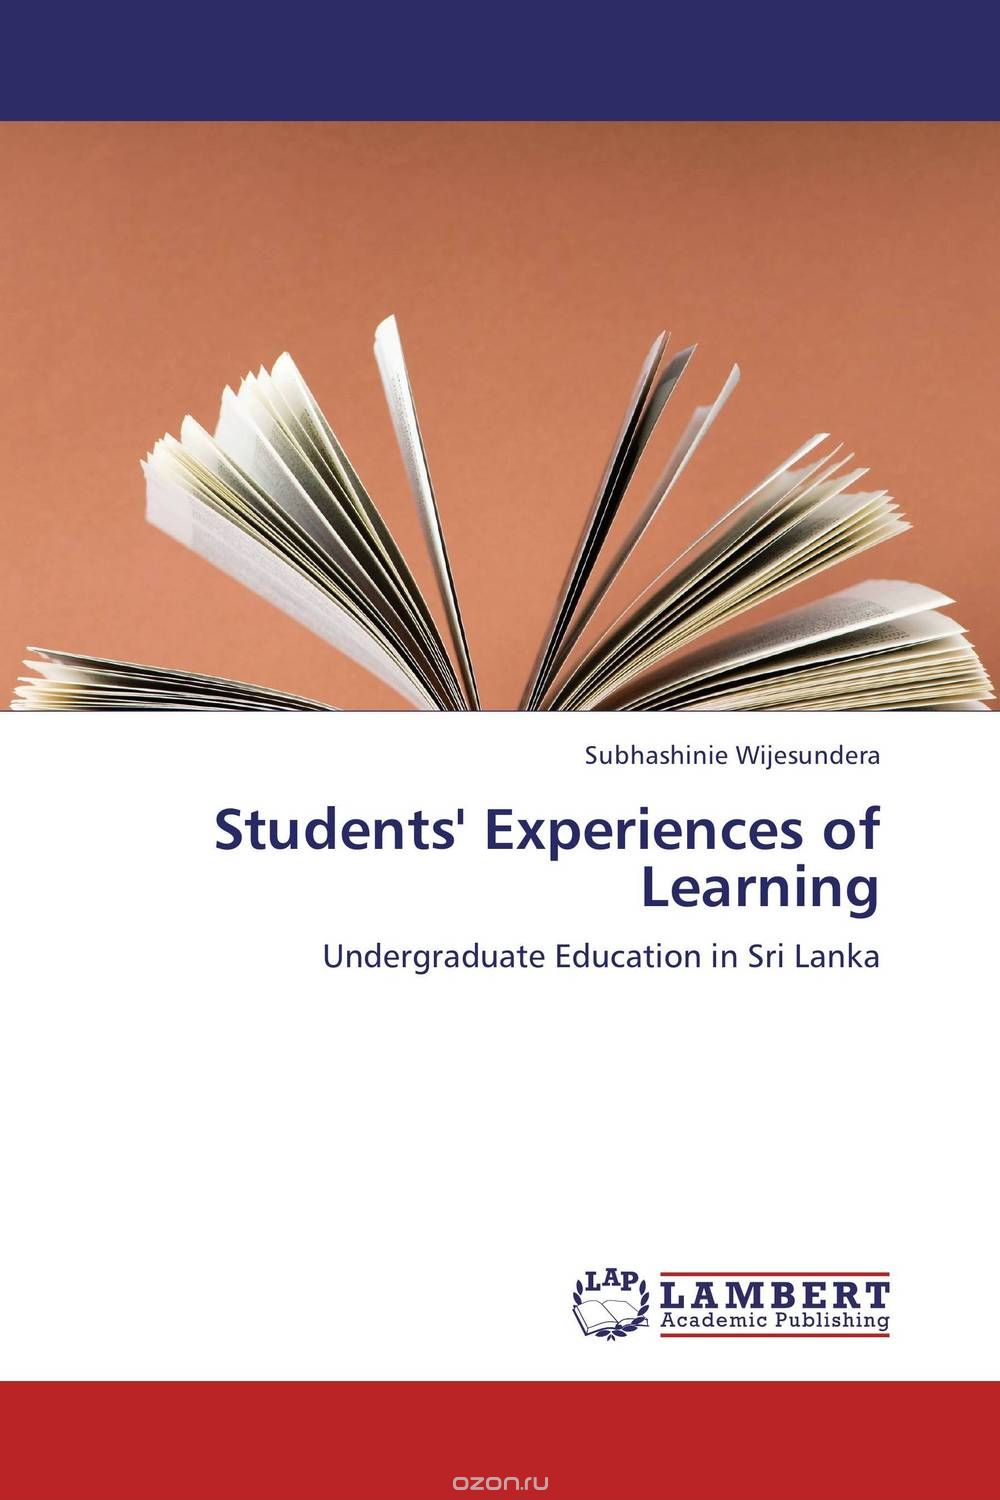 Скачать книгу "Students' Experiences of Learning"